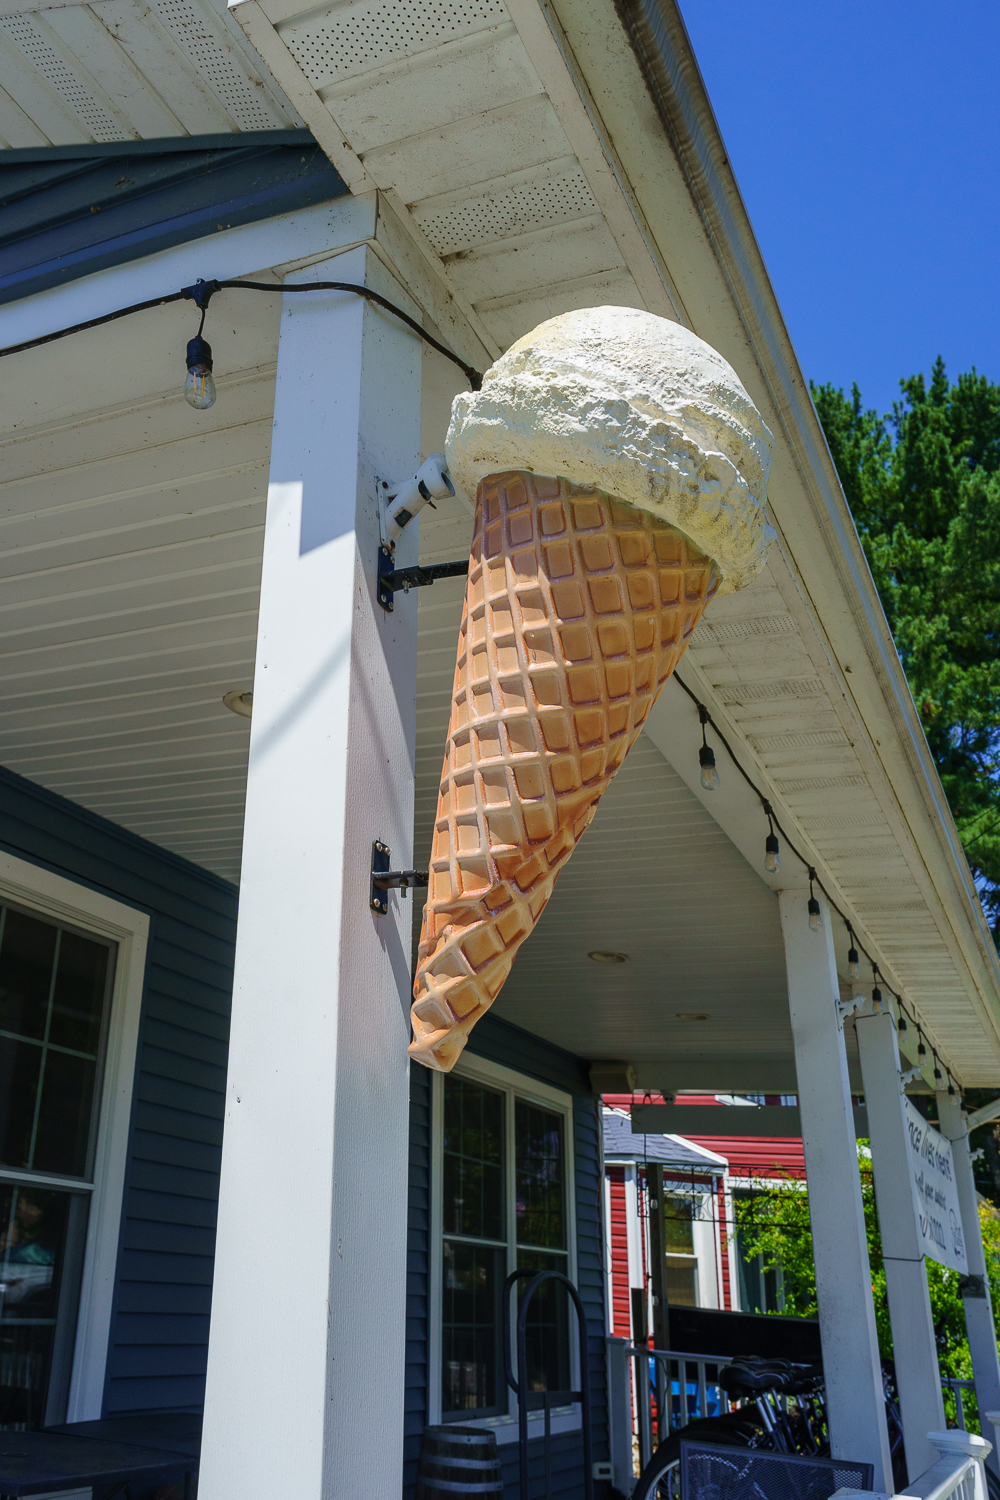 Ice Cream Cone Sign Photo by George Sheldon